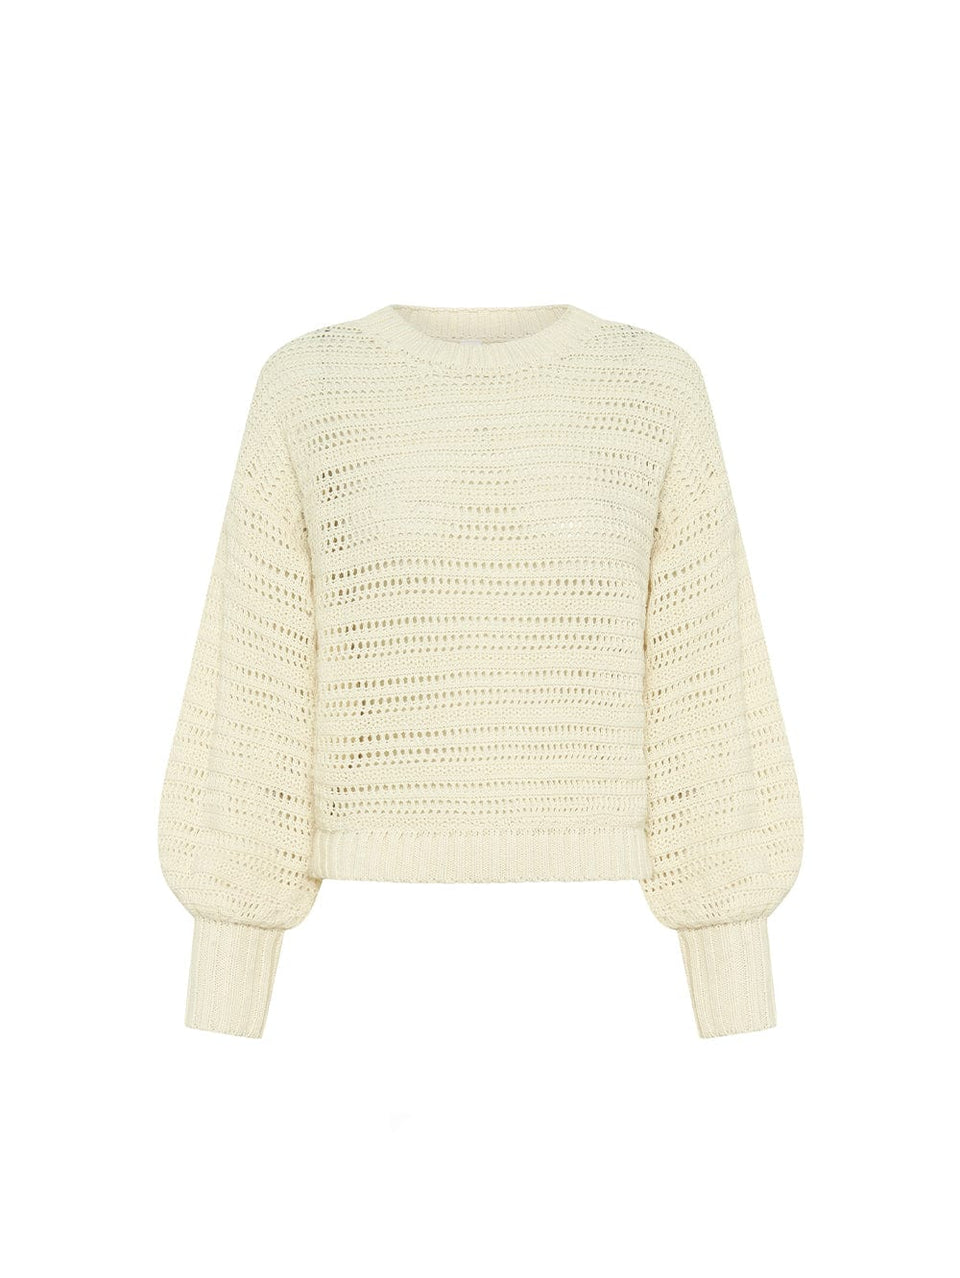 Pepe Knit Sweater Cream KIVARI | Cream knit sweater